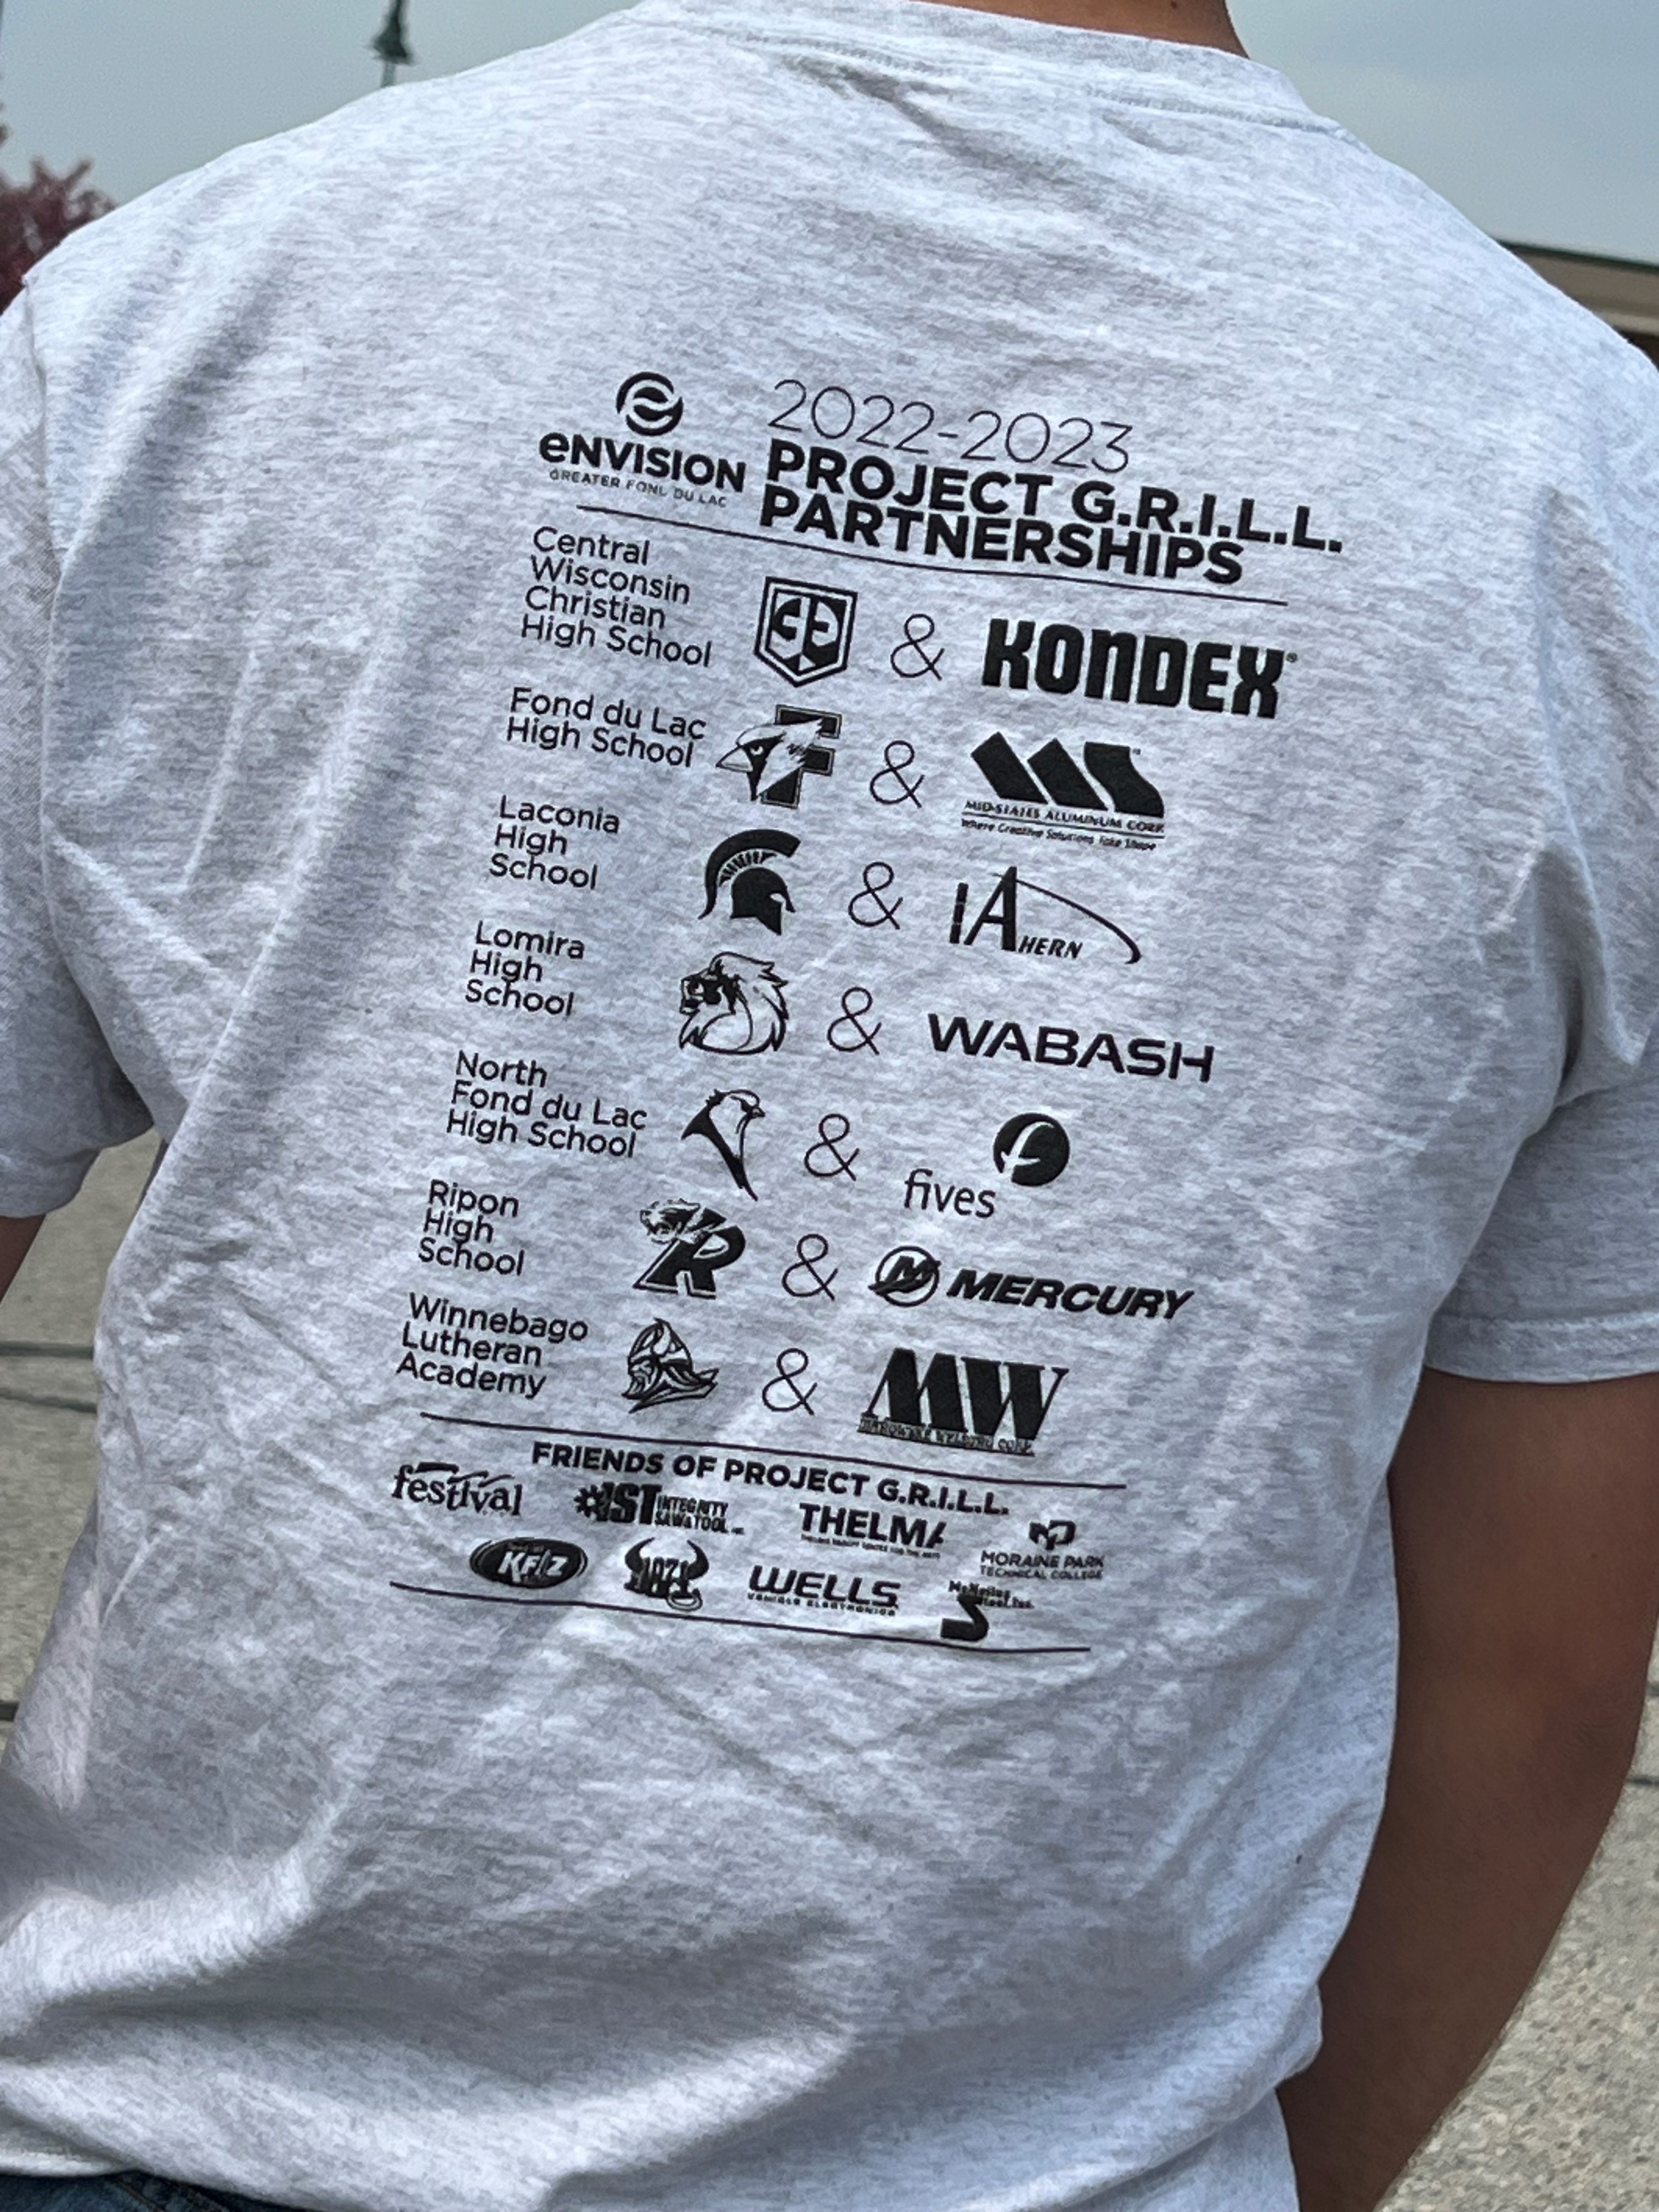 2022-2023 Project G.R.I.L.L. t-shirt showing school partnerships